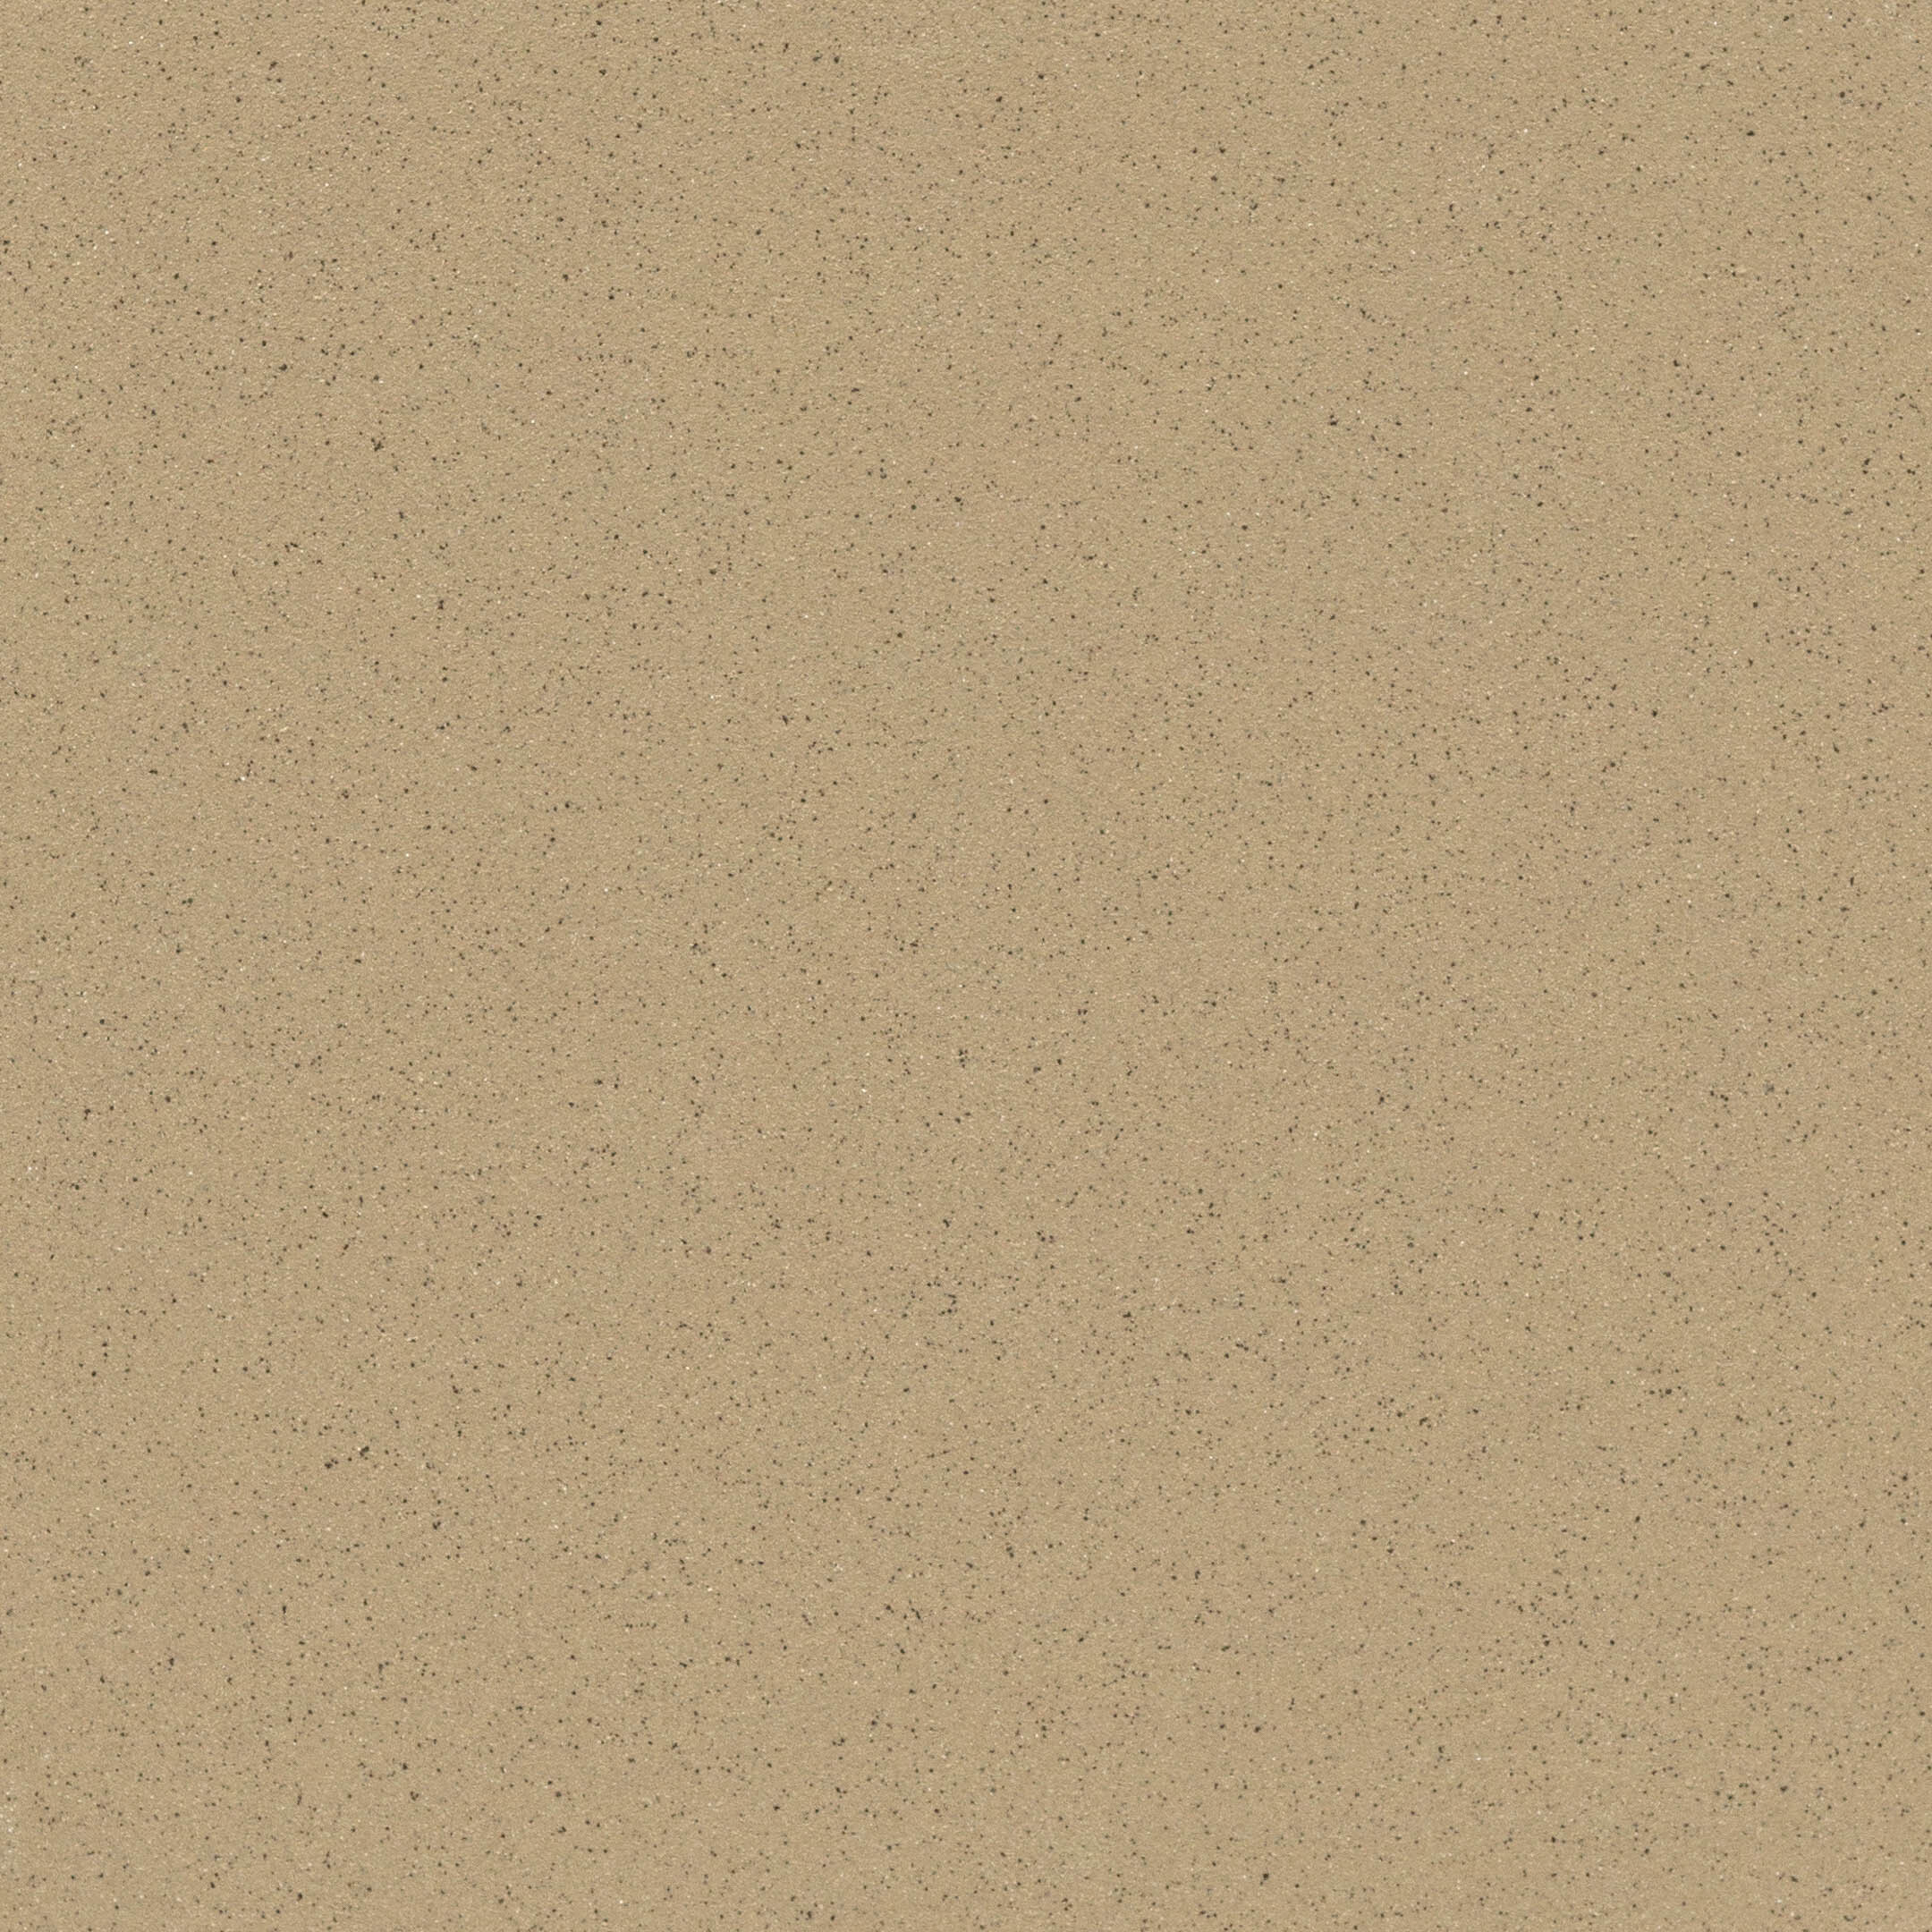 Керамогранит Quadro Decor Грес светло-серый соль-перец 300х300х7 мм (17 шт.=1,53 кв.м) керамогранит quadro decor соль перец 30x30 см 1 44 м2 неполированный цвет серый